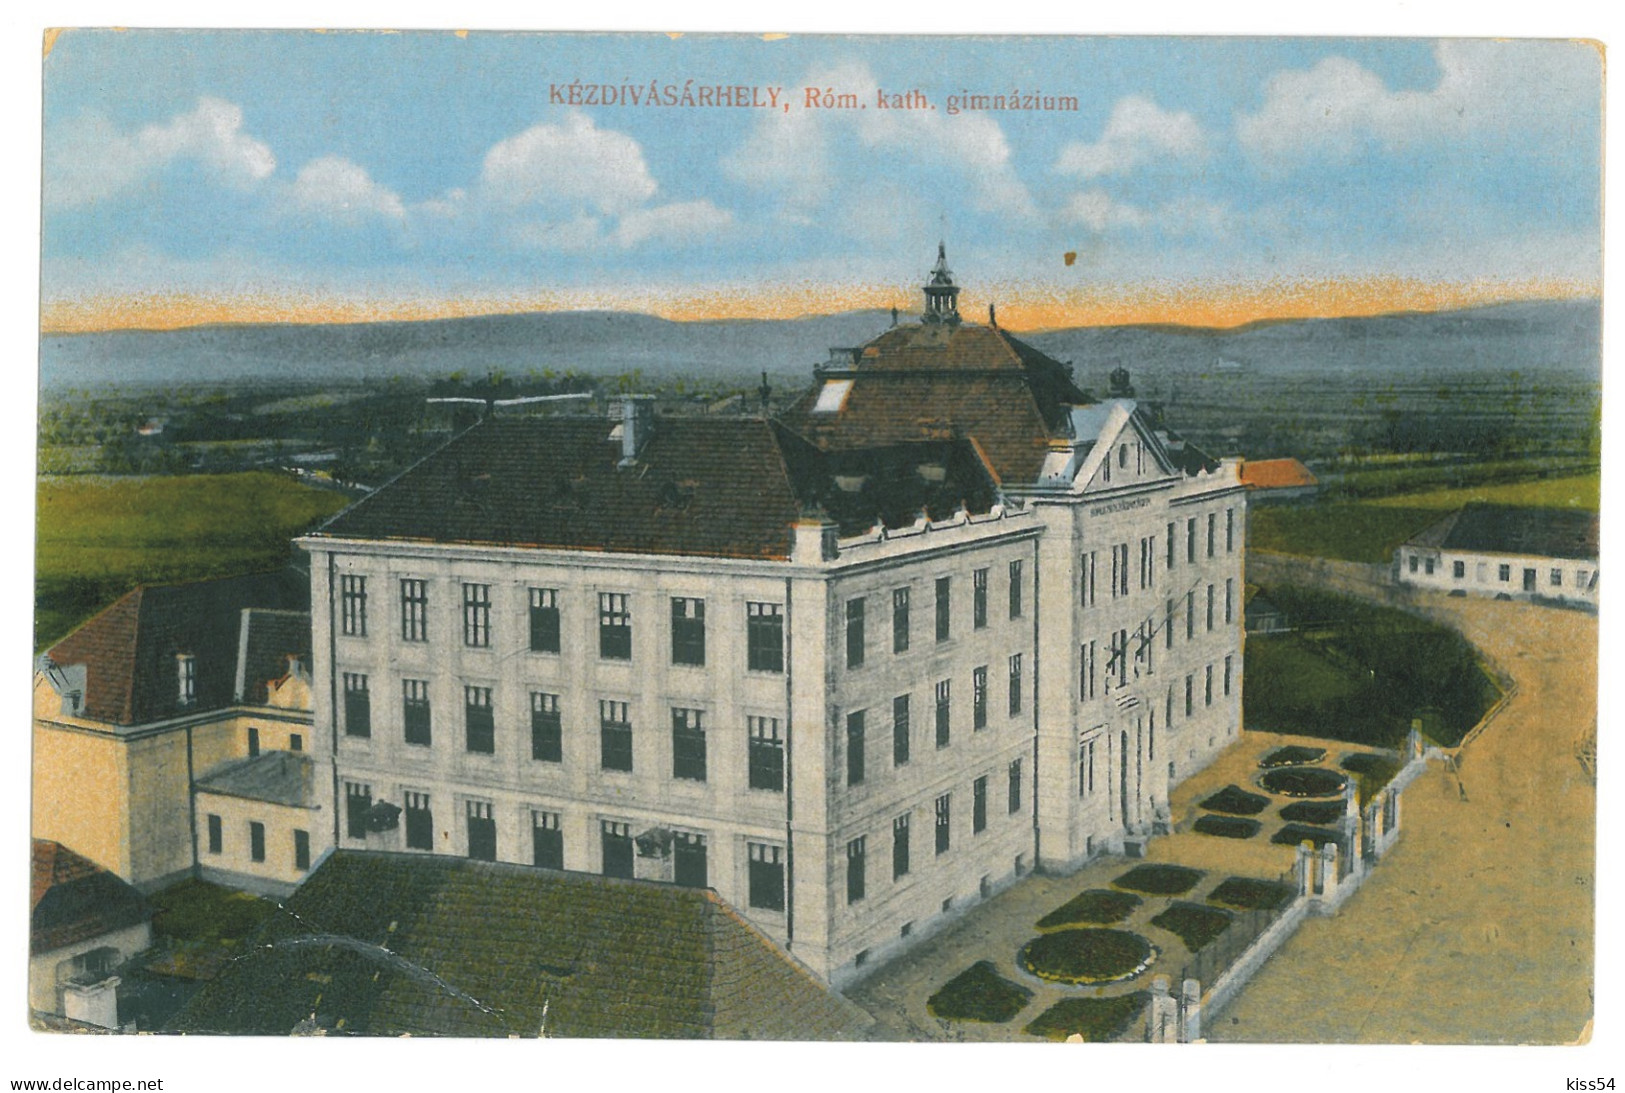 RO 77 - 23473 TARGU-SECUIESC, Harghita, High School, Romania - Old Postcard - Used - 1917 - Romania